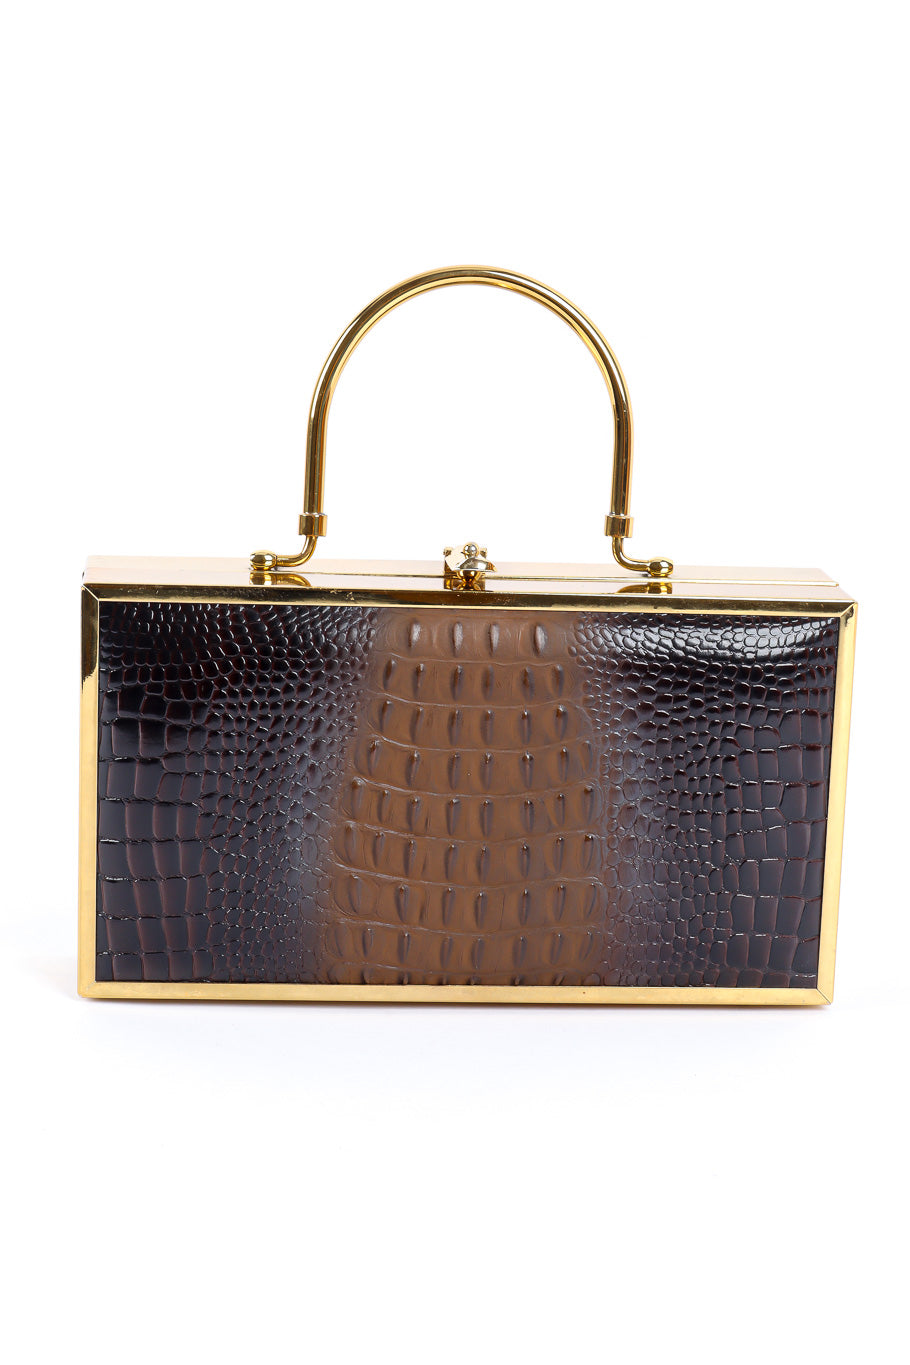 Lou Taylor gold frame box purse product shot @recessla